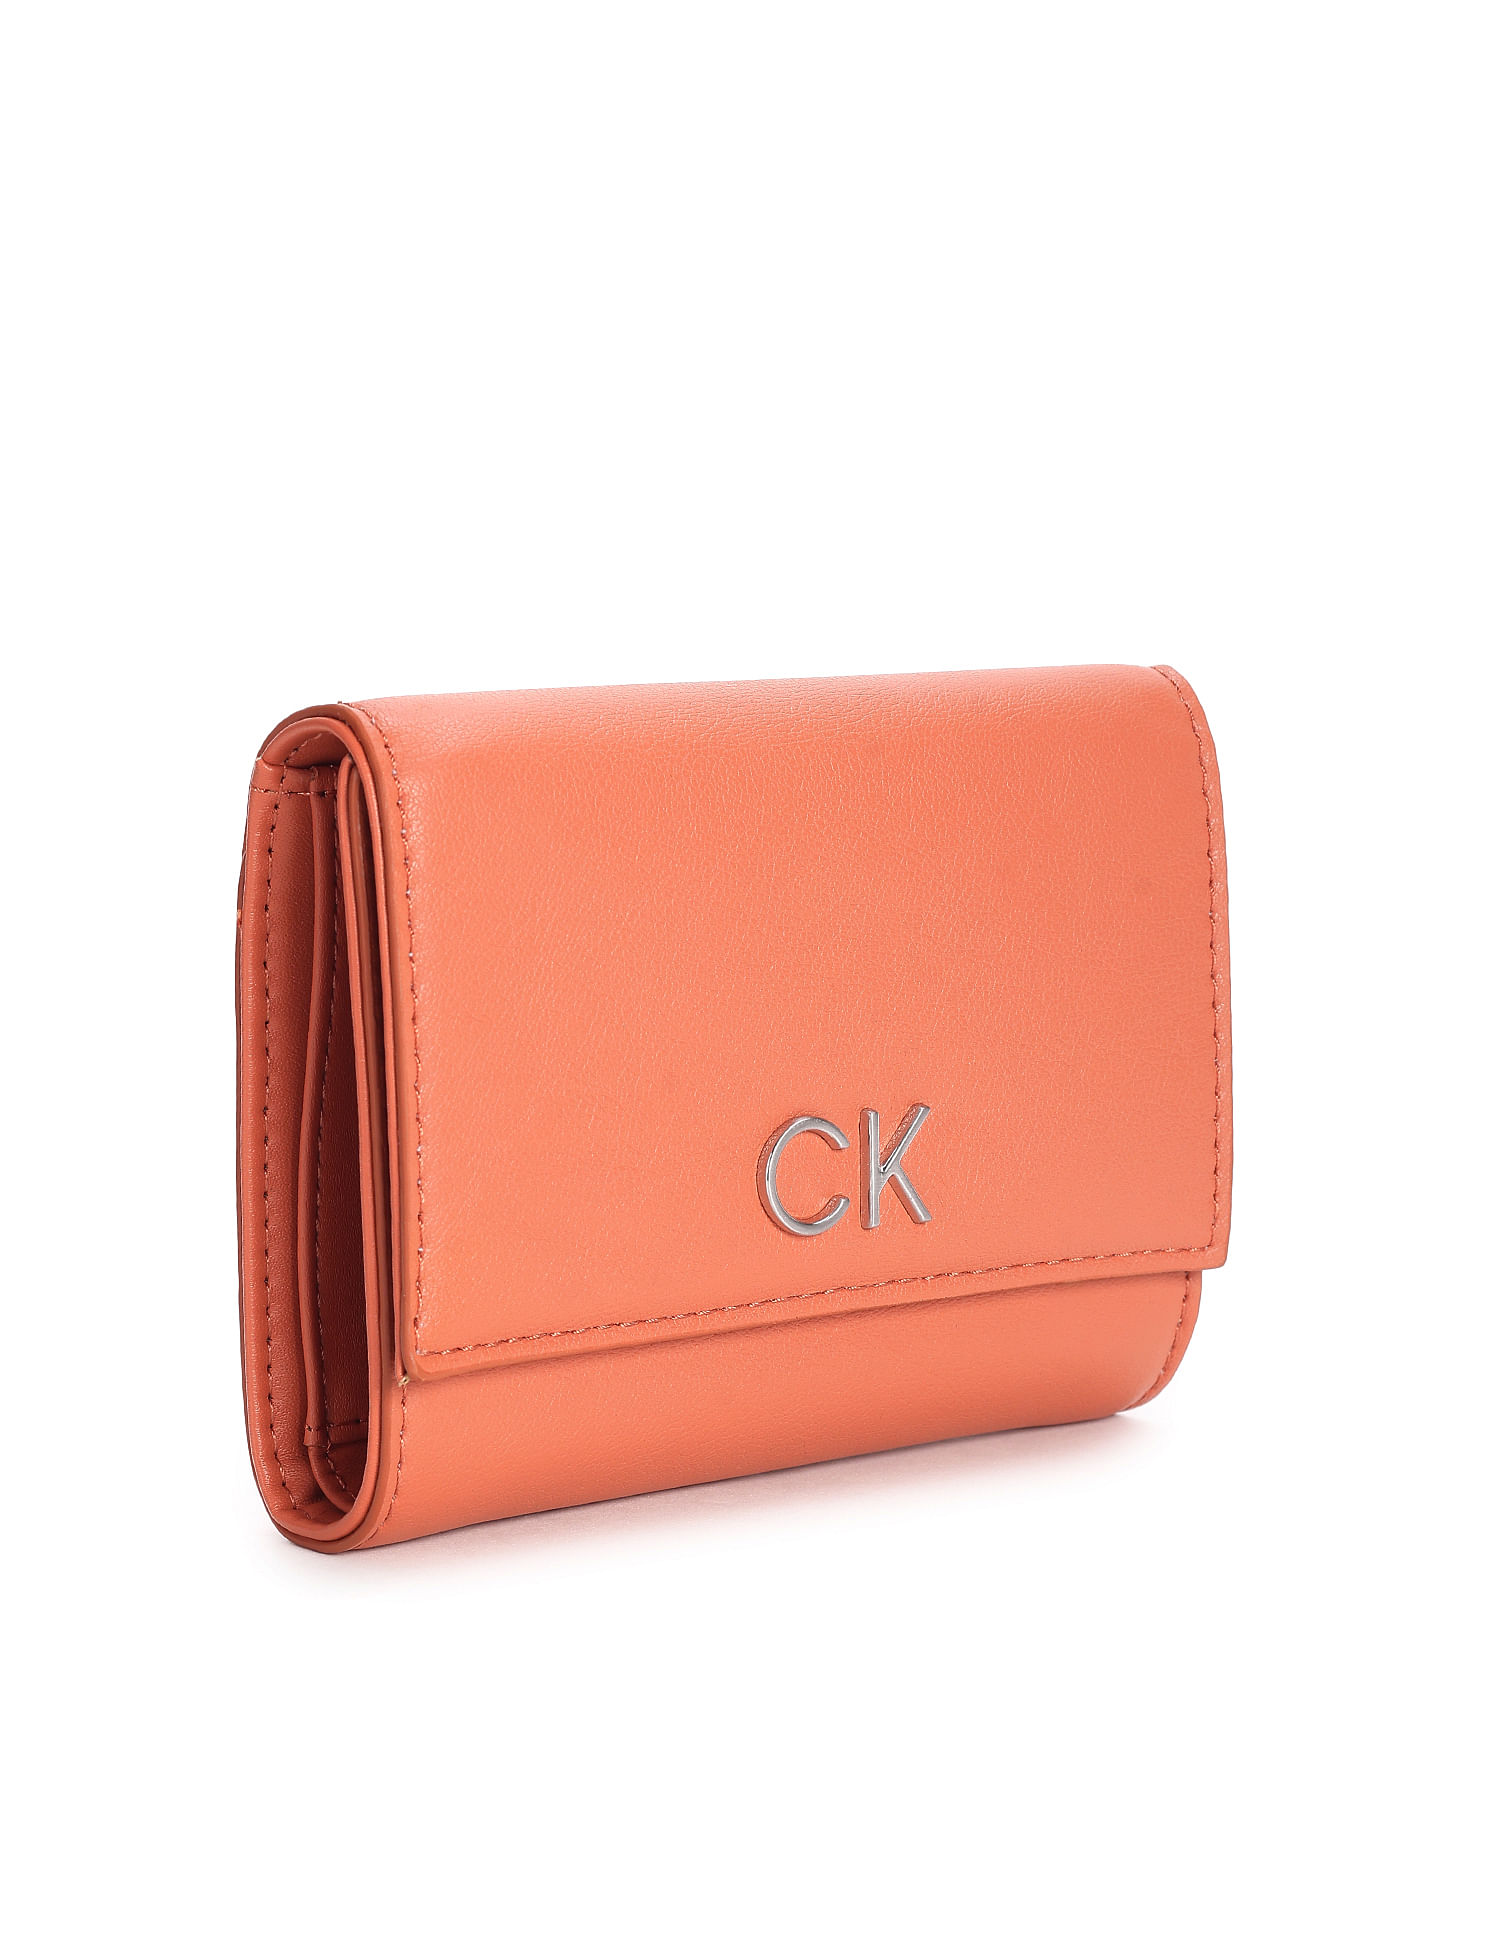 Buy Calvin Klein Men's CK Logo Leather Bifold Wallet at Amazon.in